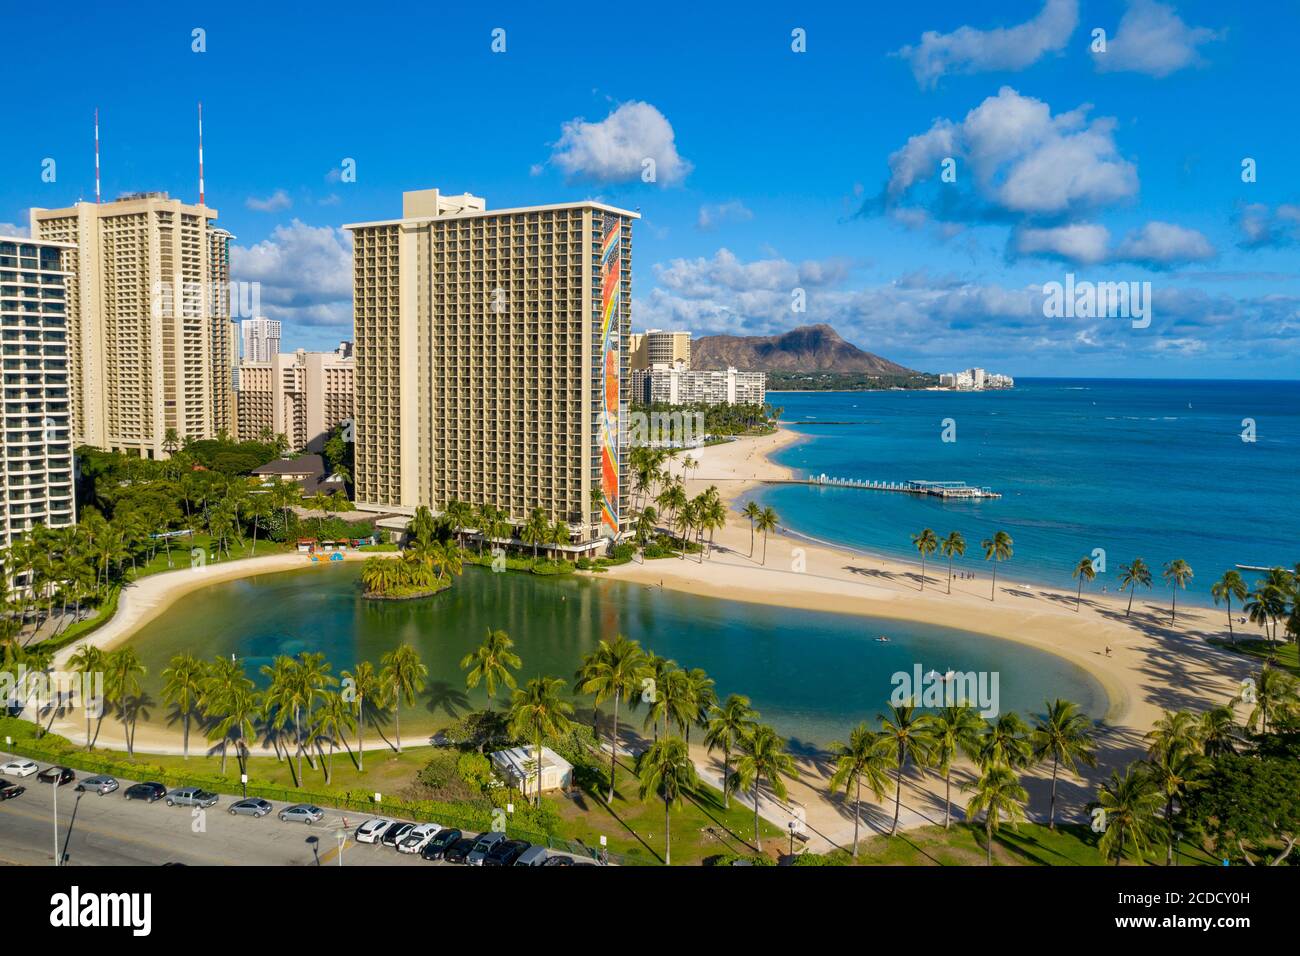 Hilton Hawaiian Village, Waikiki Beach, Honolulu, Oahu, Hawaii